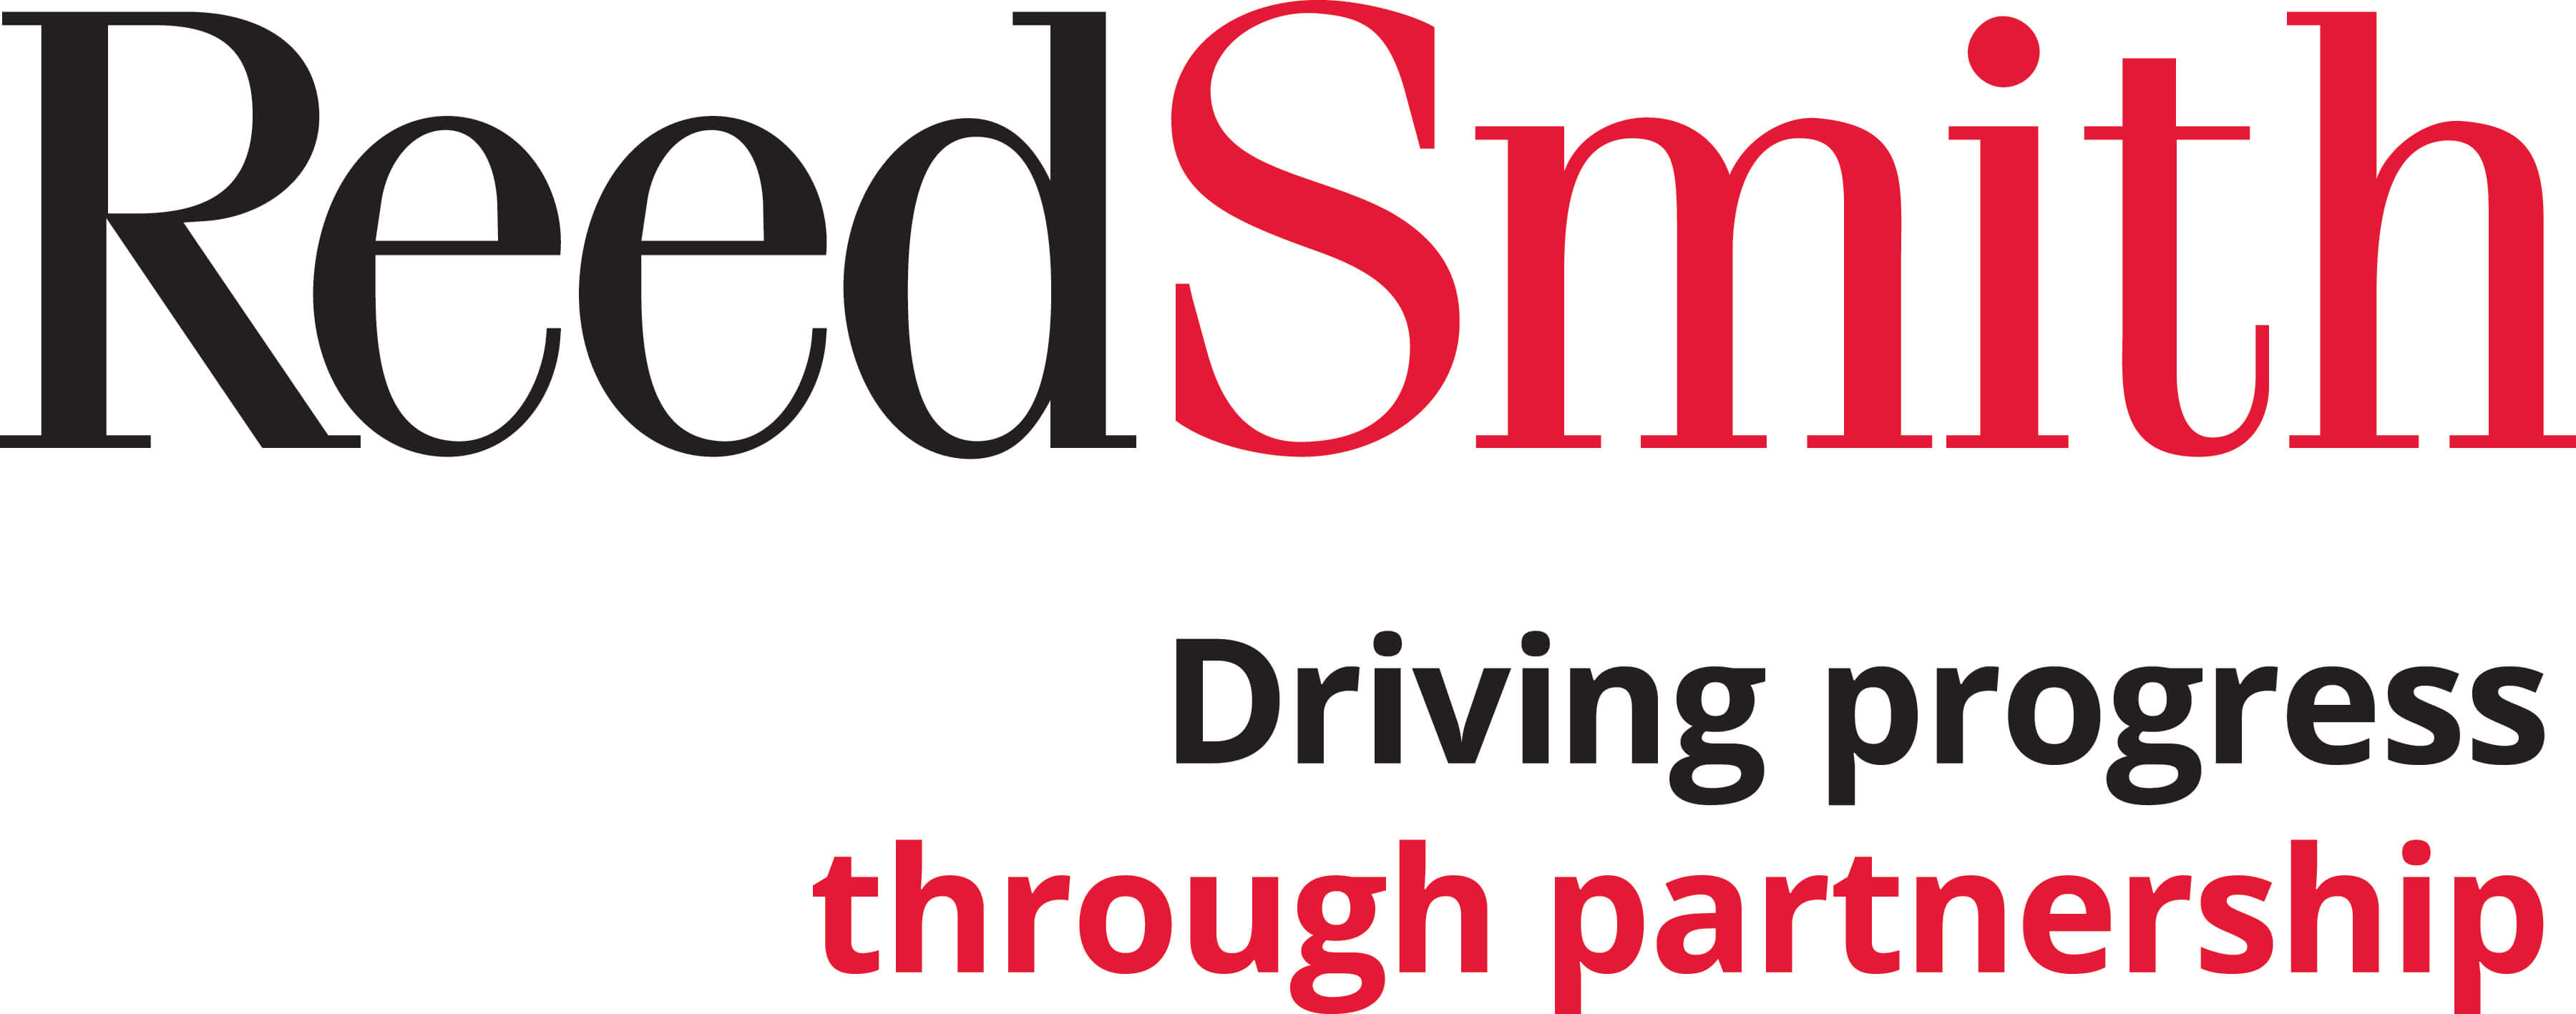 ReedSmith Driving Progress Through Partnership